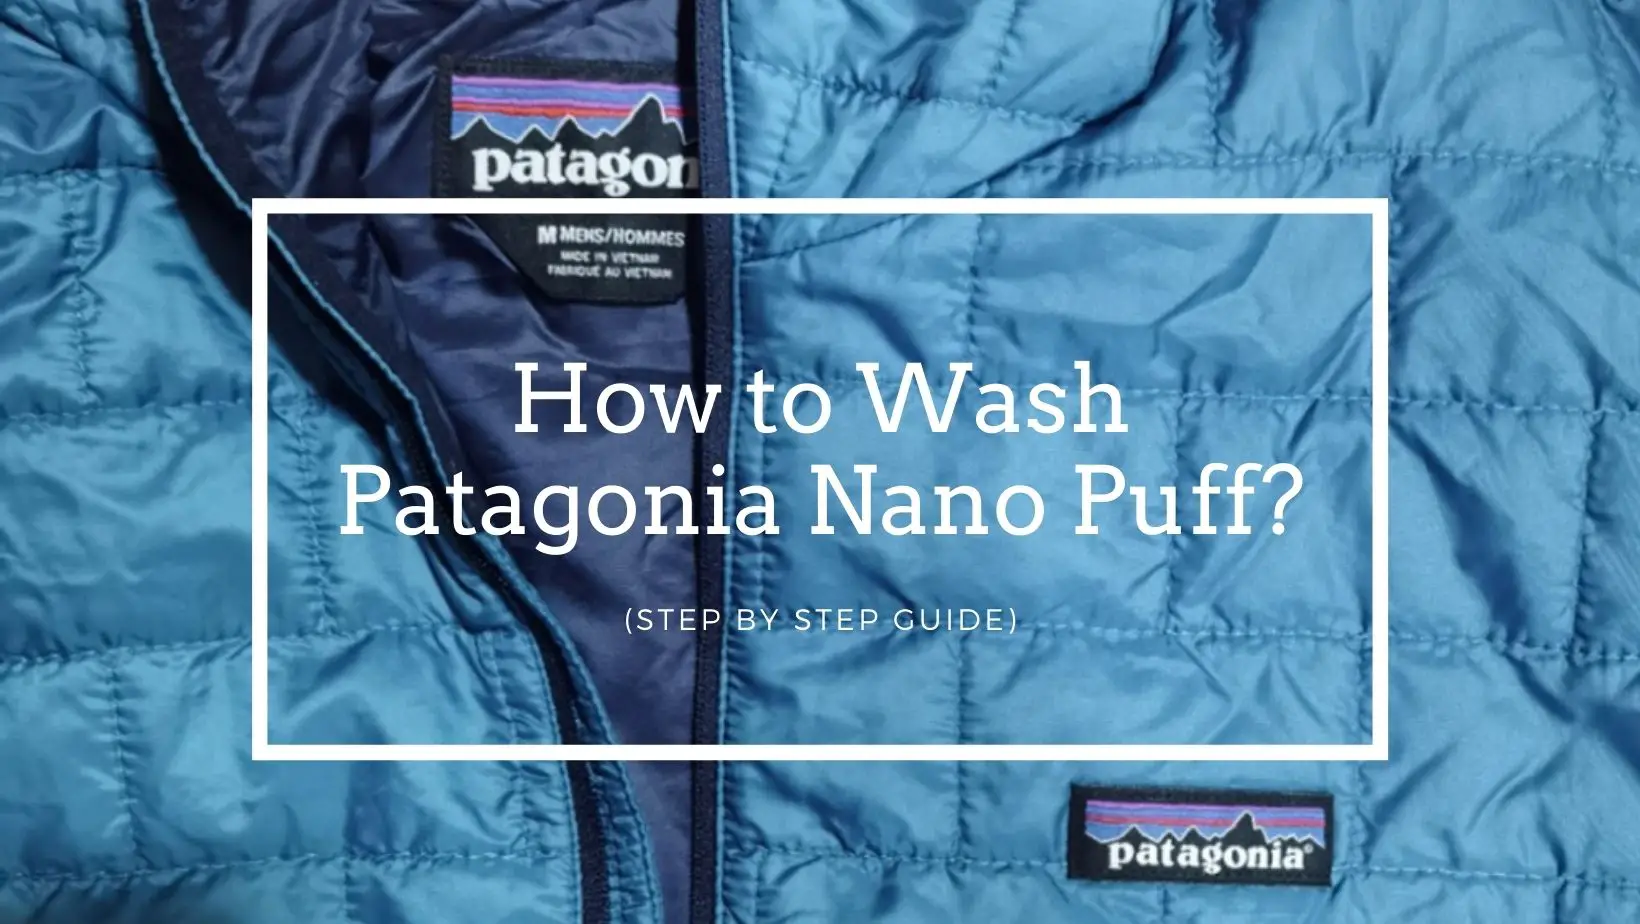 lur Sudan svulst washing instructions patagonia down jacket